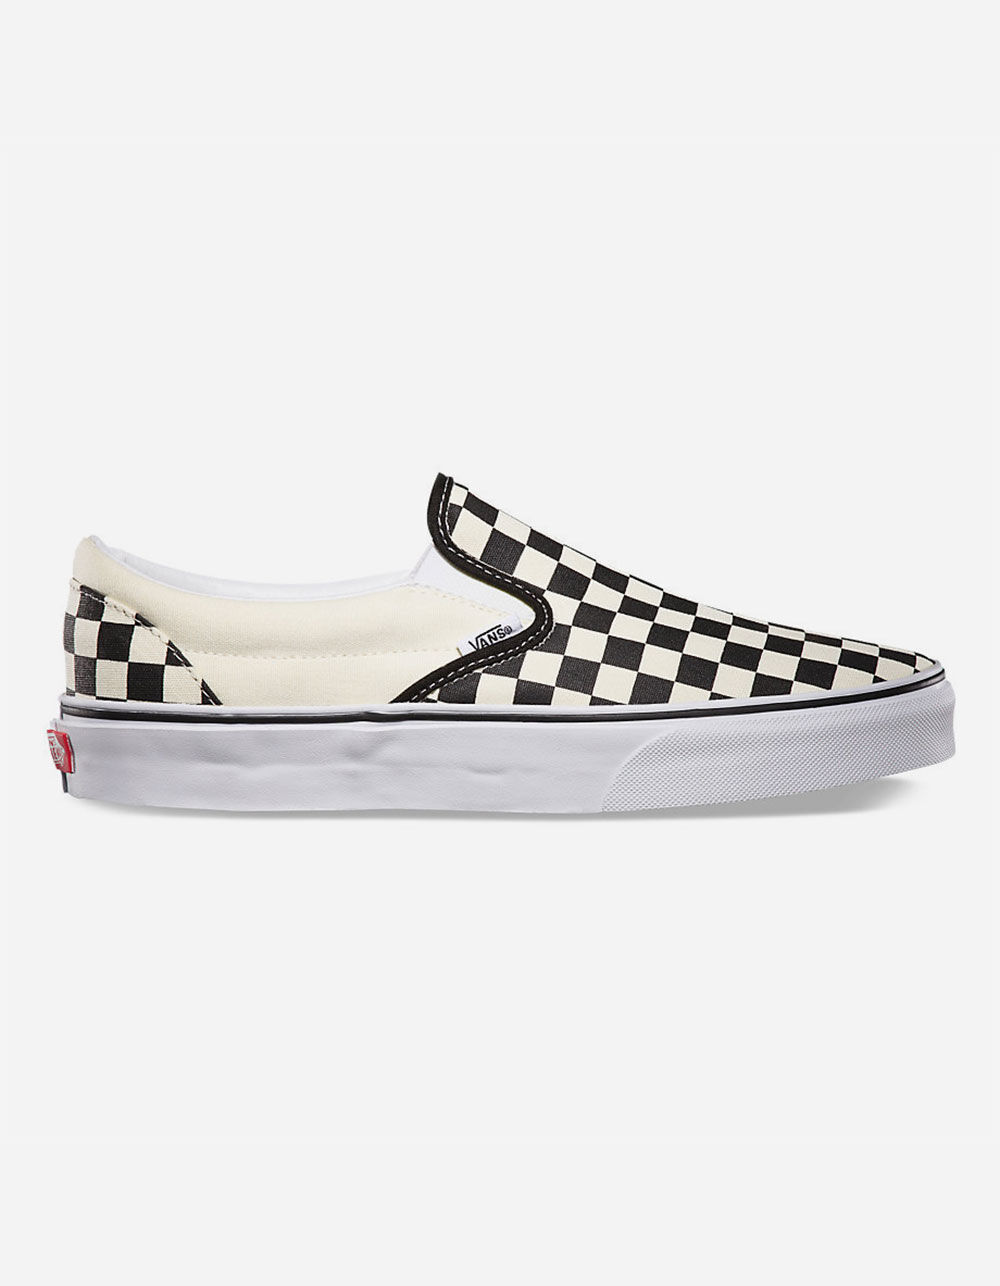 VANS Checkerboard Slip-On Black & Off White Shoes